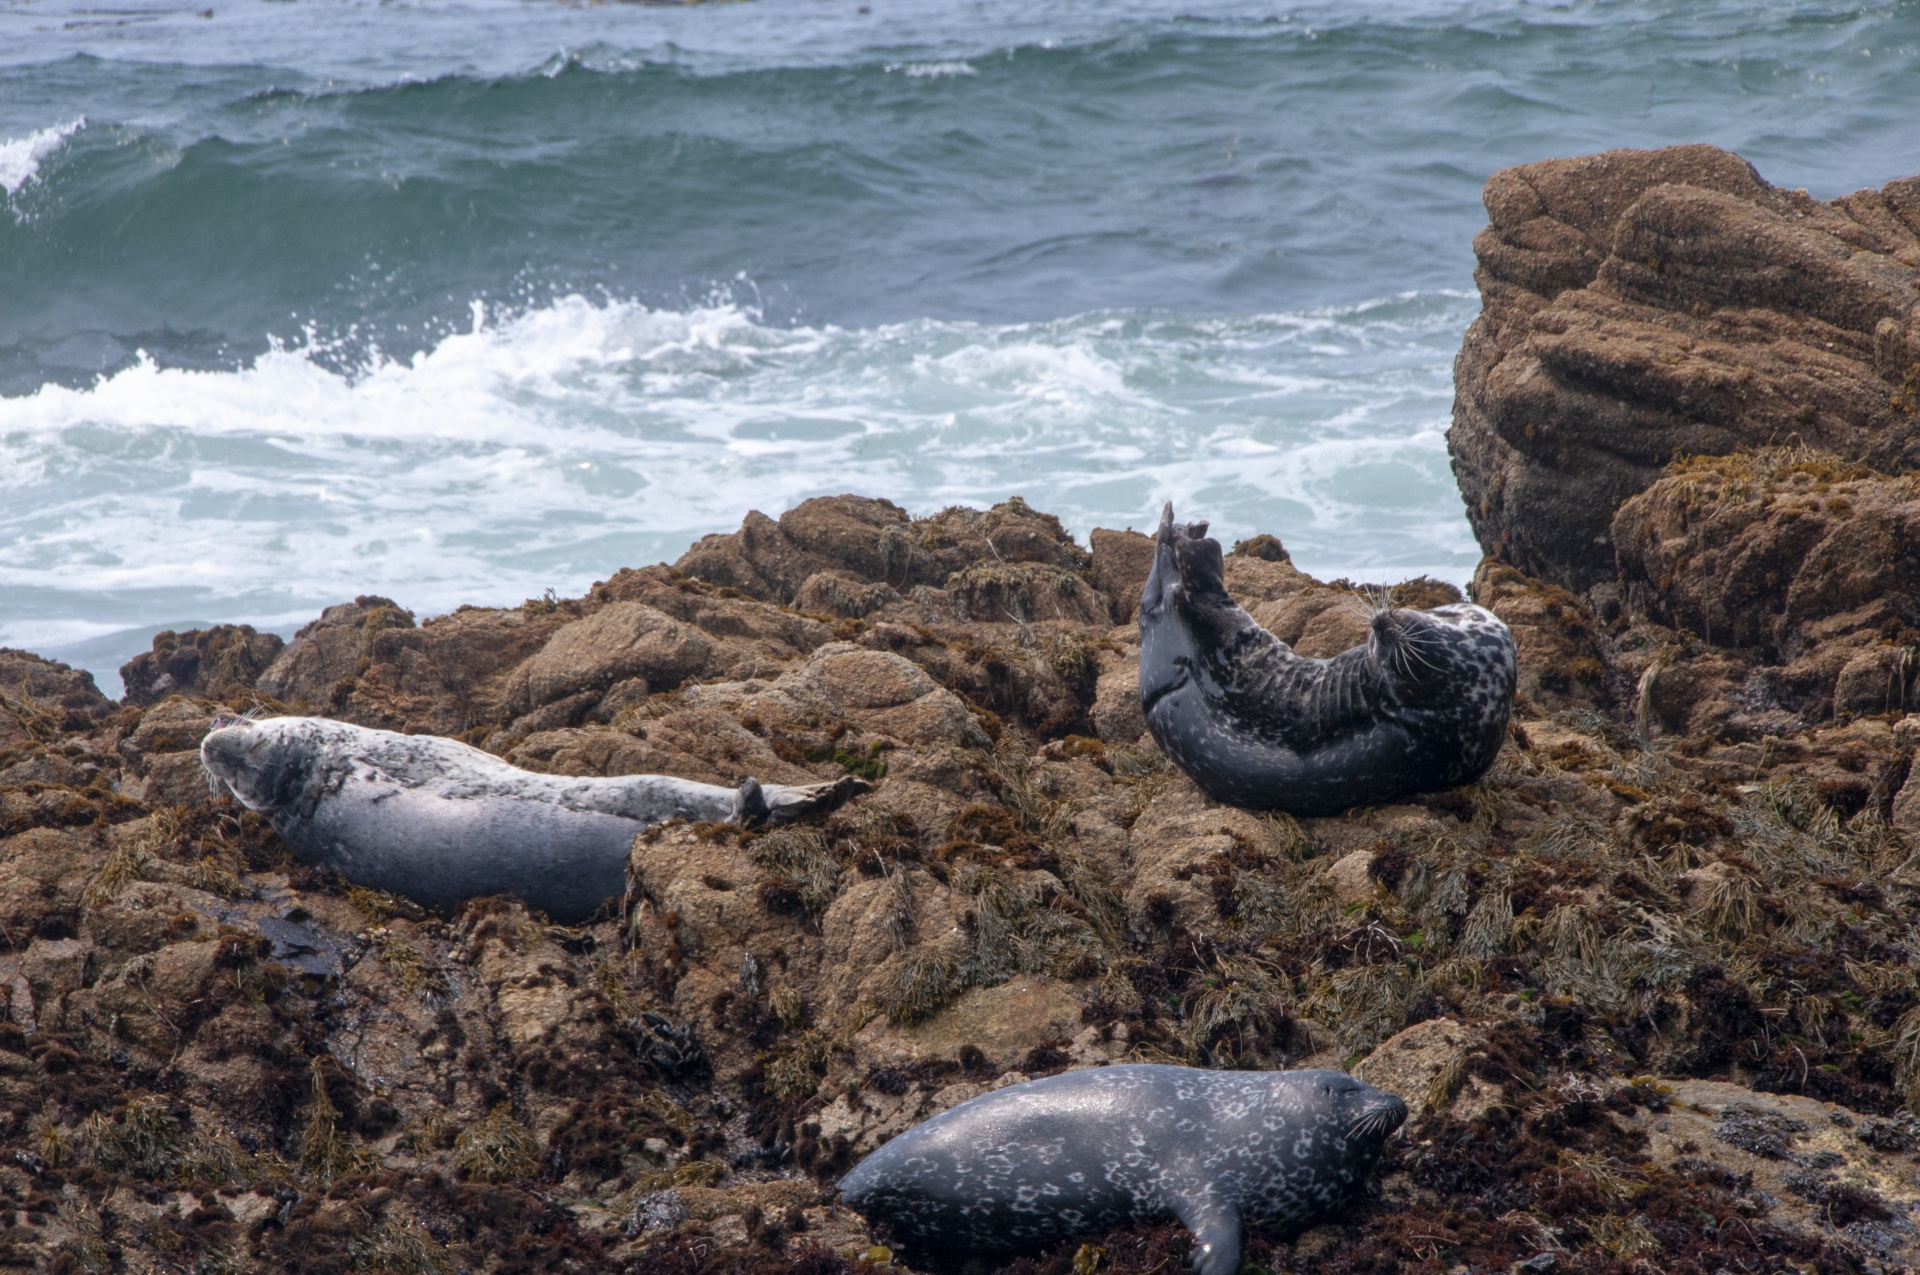 three molting seals on rocks with crashing waves behind them